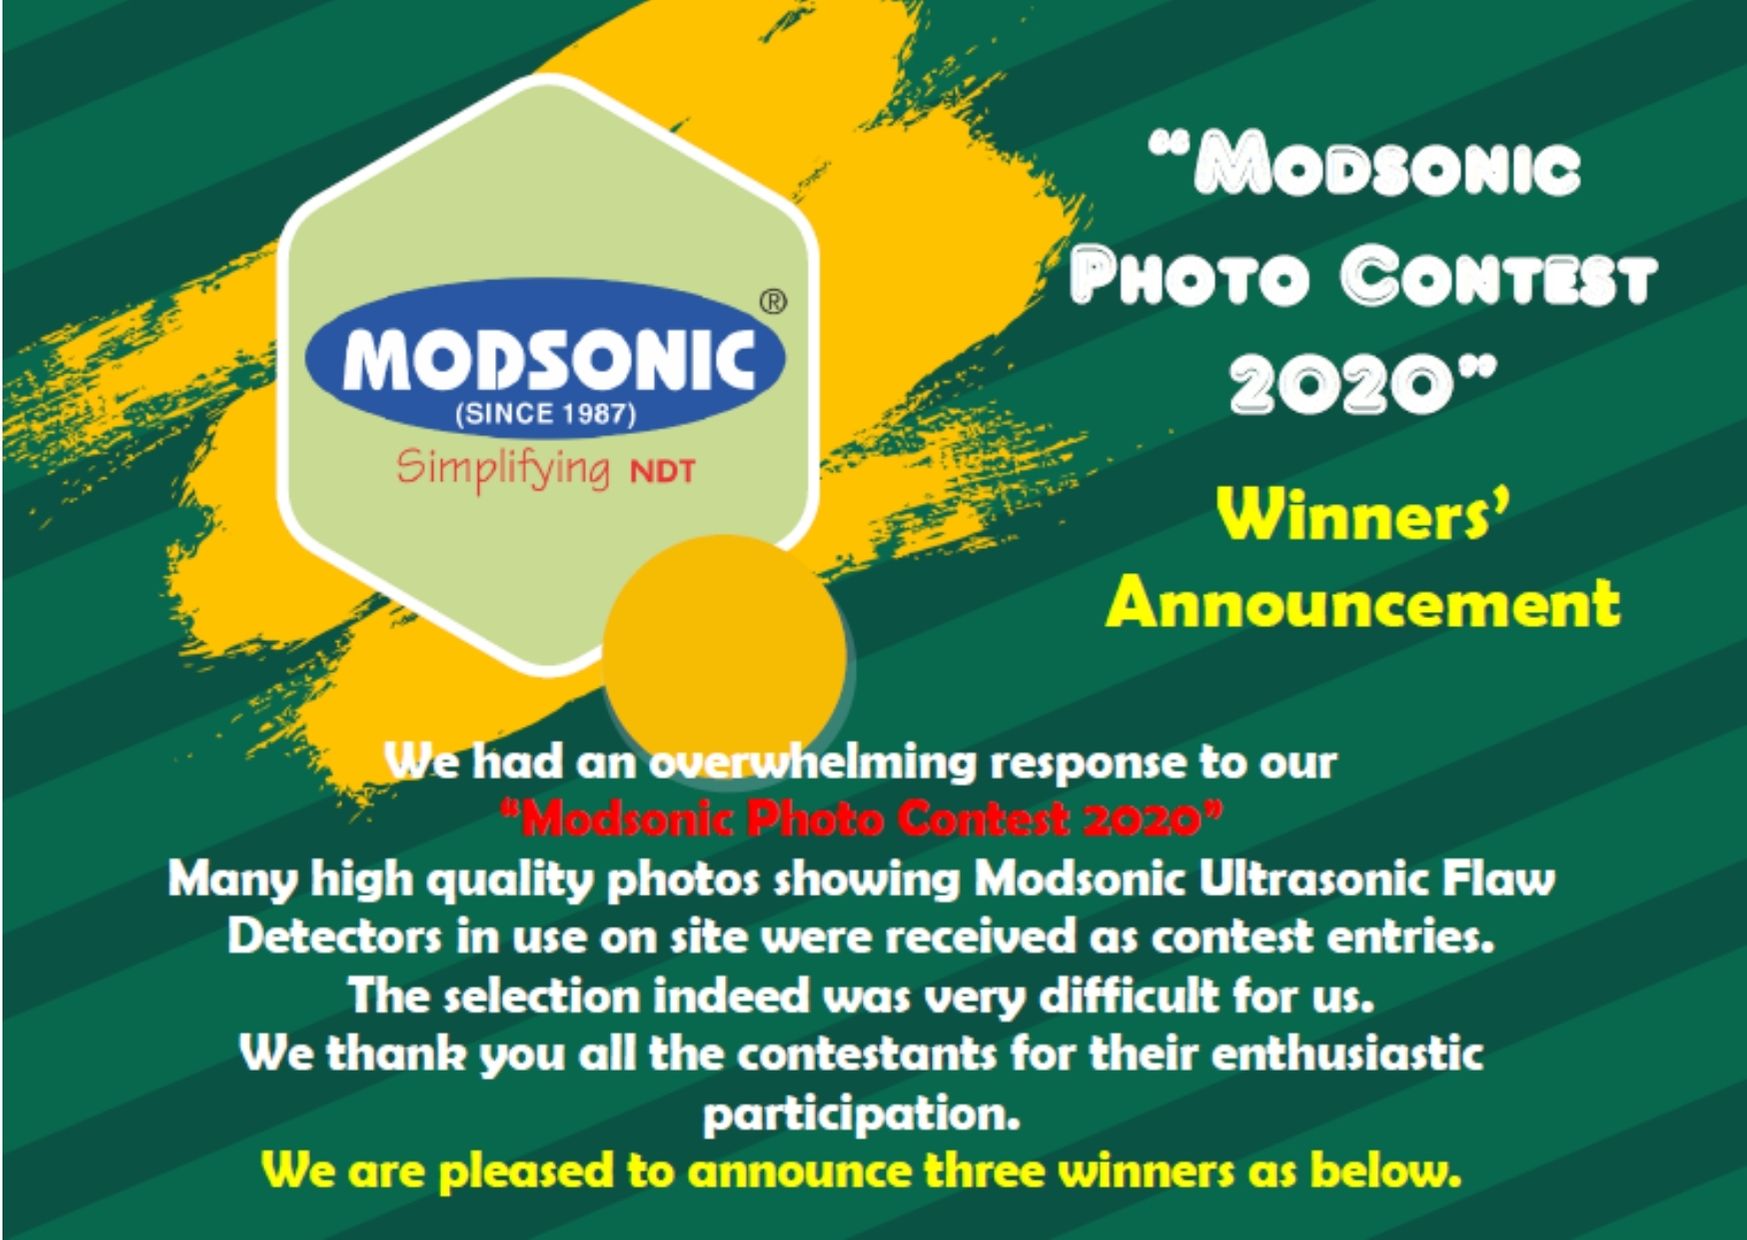 Modsonic Photo Contest 2020